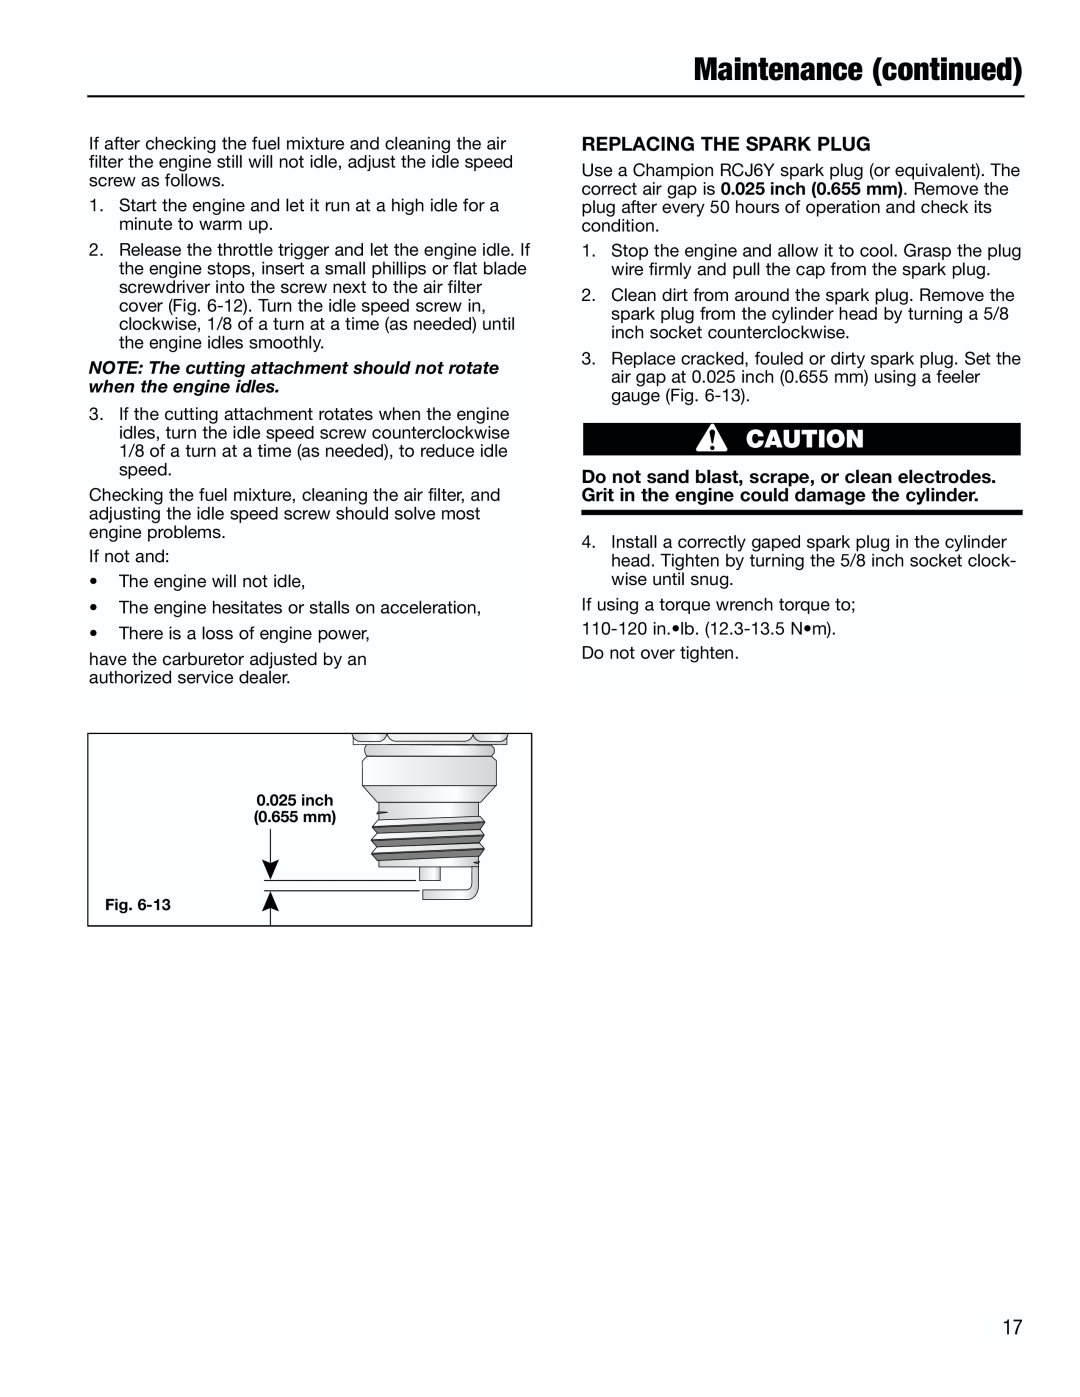 Troy-Bilt TB3000 manual Maintenance continued, Replacing The Spark Plug 